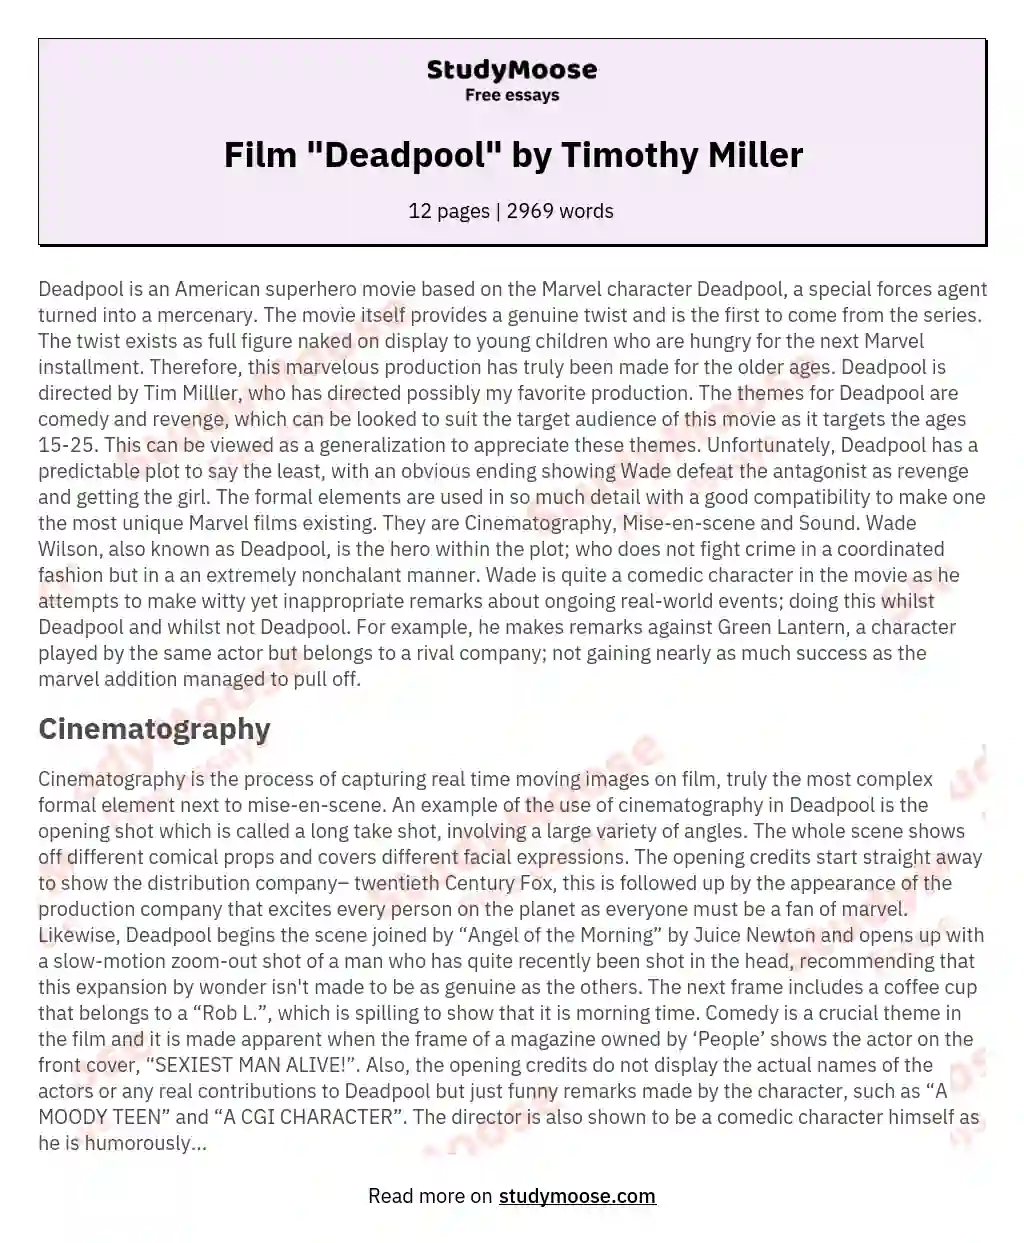 Film "Deadpool" by Timothy Miller essay